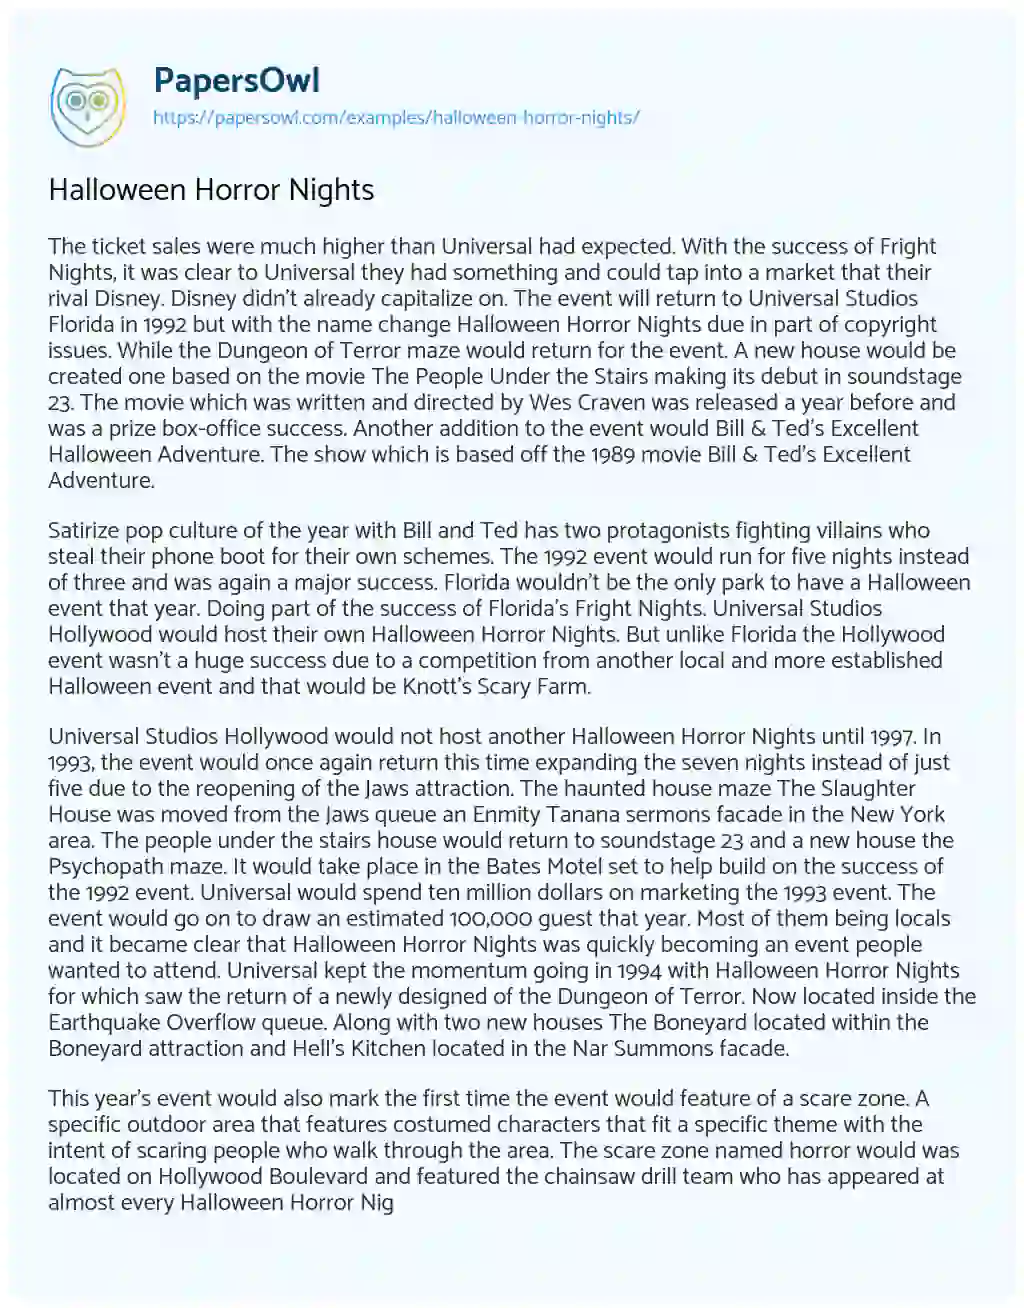 Essay on Halloween Horror Nights